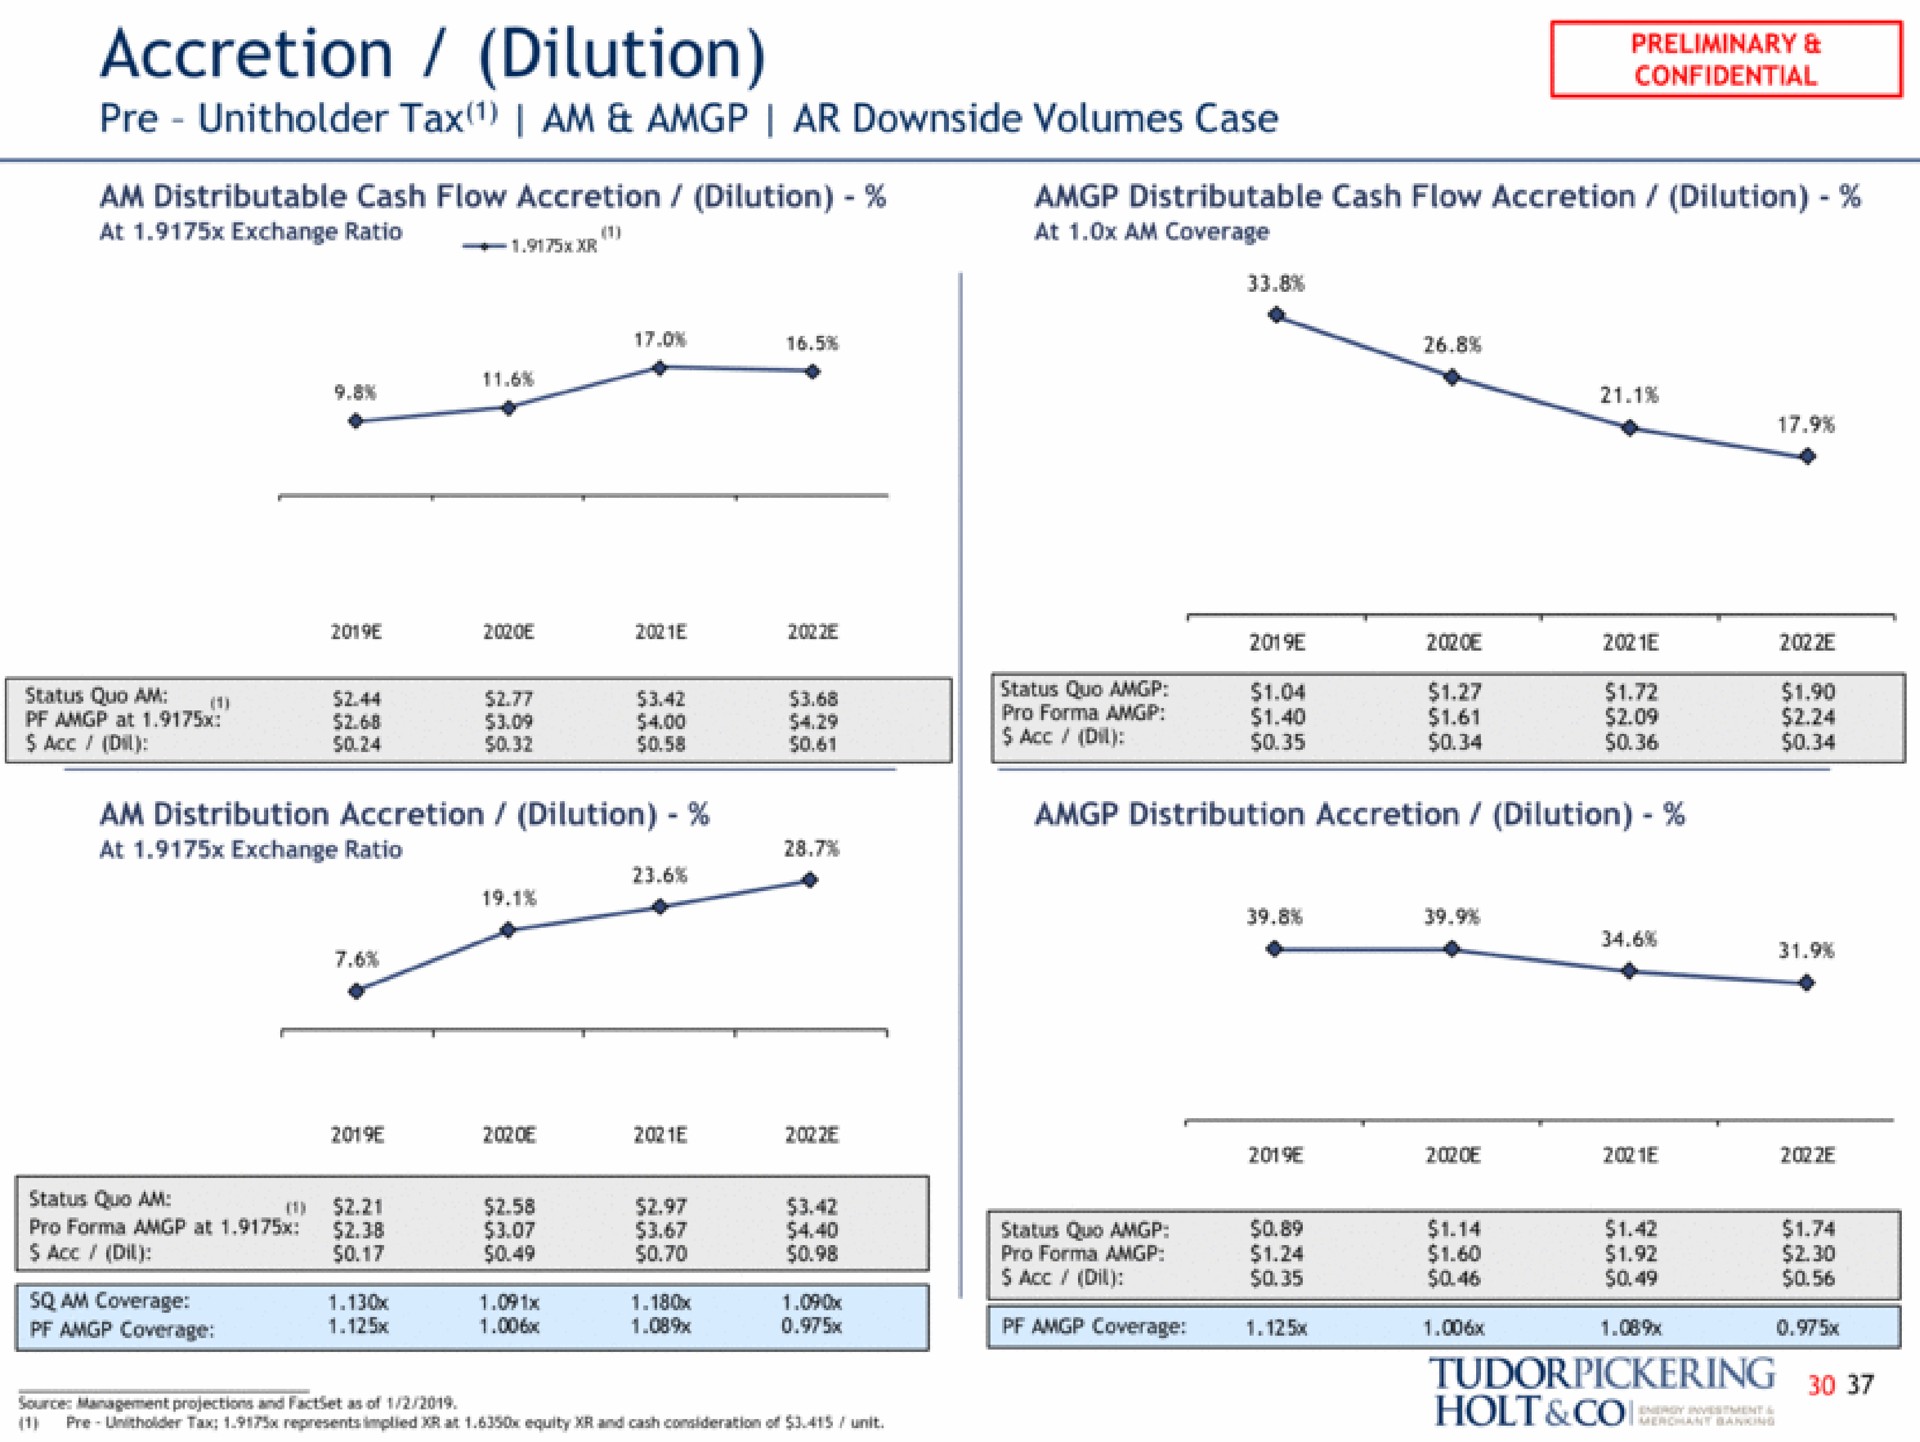 accretion dilution | Tudor, Pickering, Holt & Co